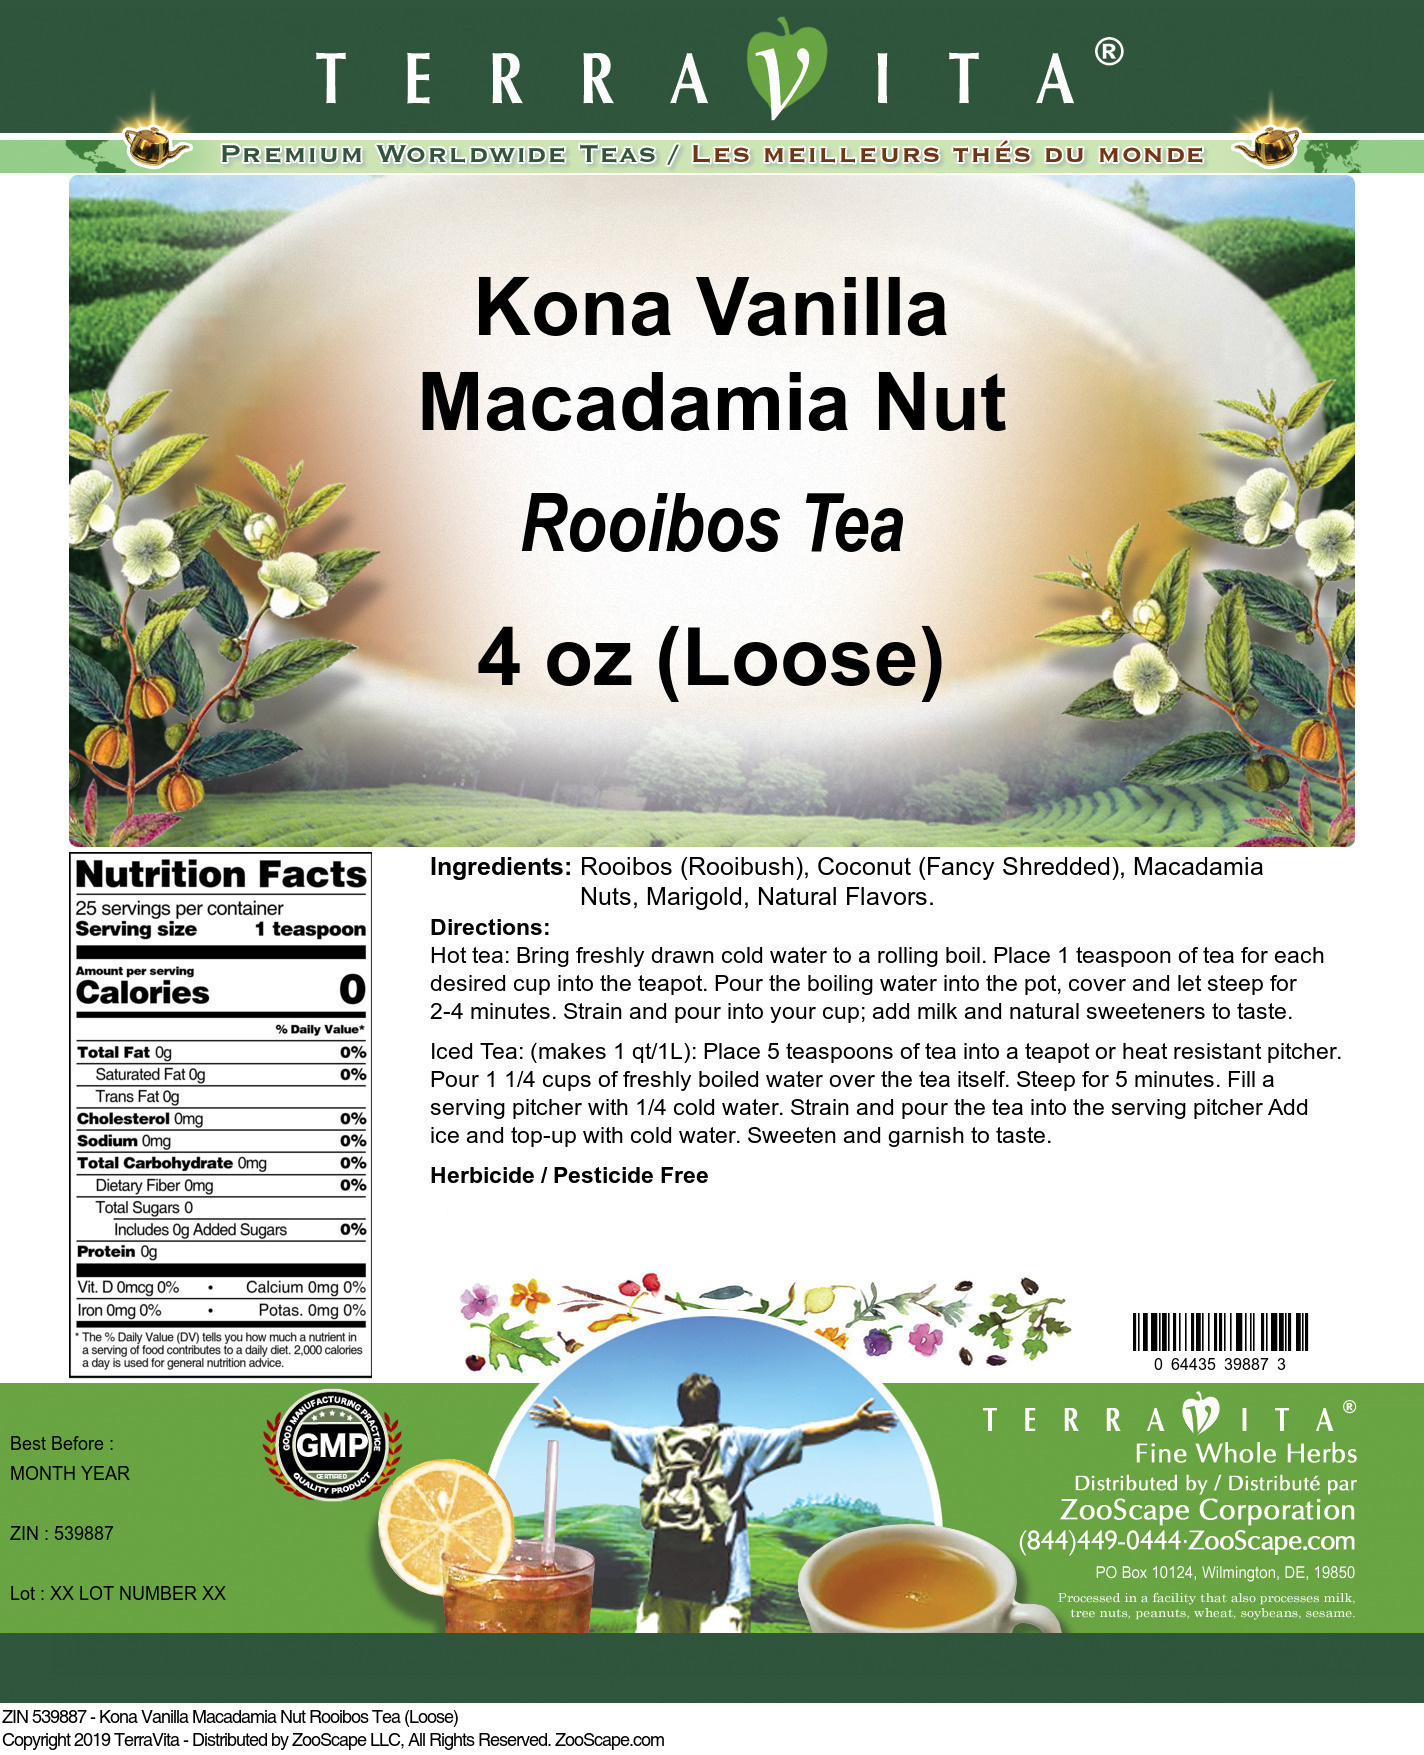 Kona Vanilla Macadamia Nut Rooibos Tea (Loose) - Label